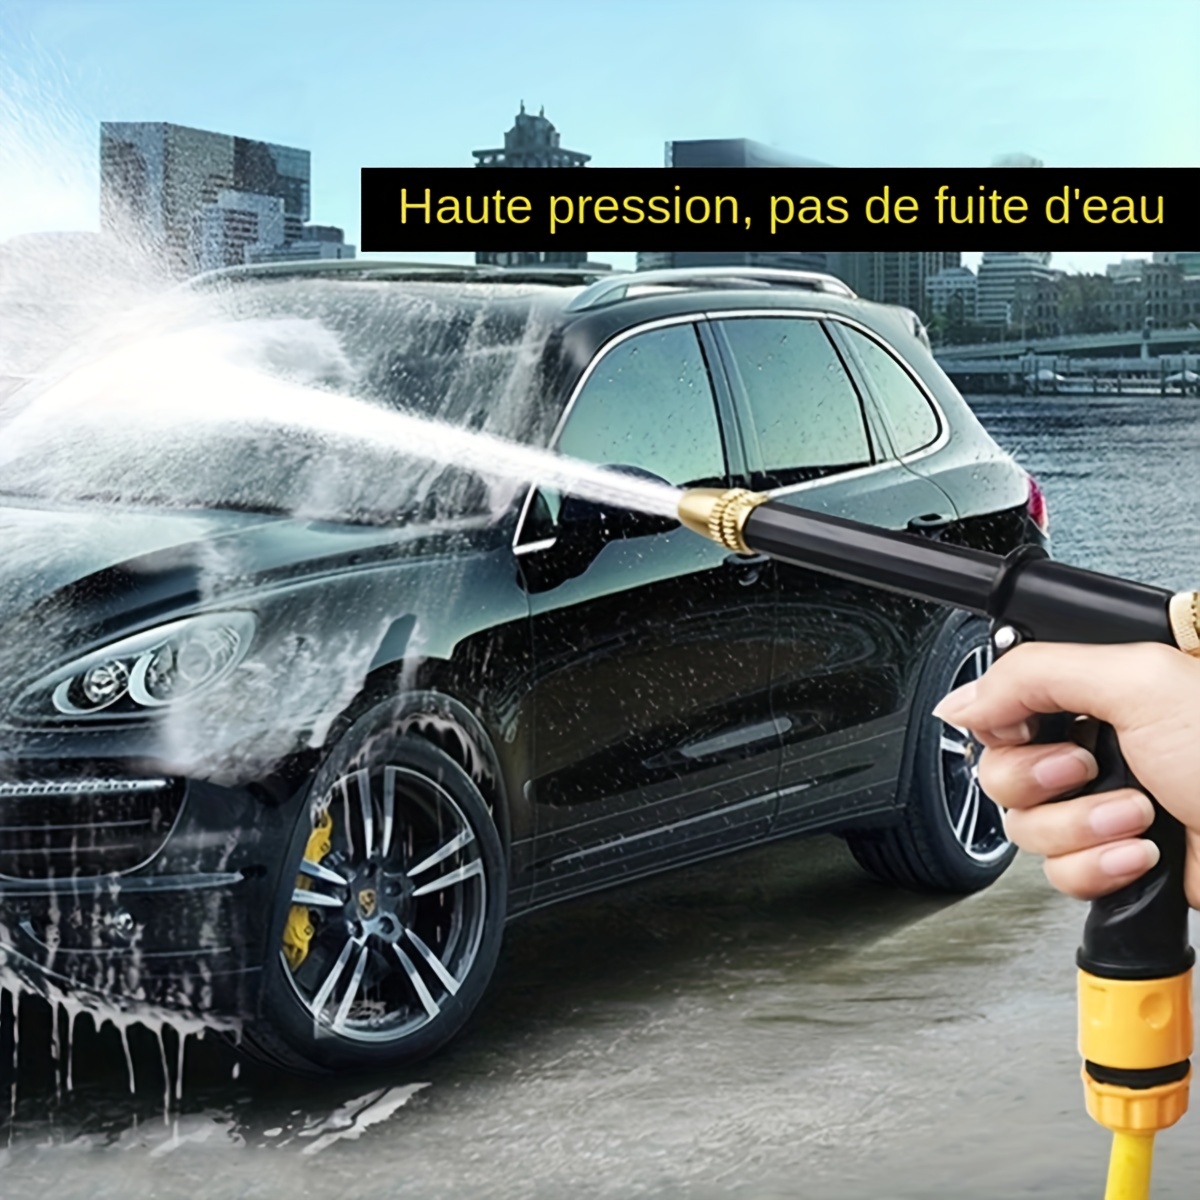 

1pc High Pressure Water Spray Lengthen, Heavy Duty Metal Handheld Water Nozzle, Car Washing Garden Tool (black)